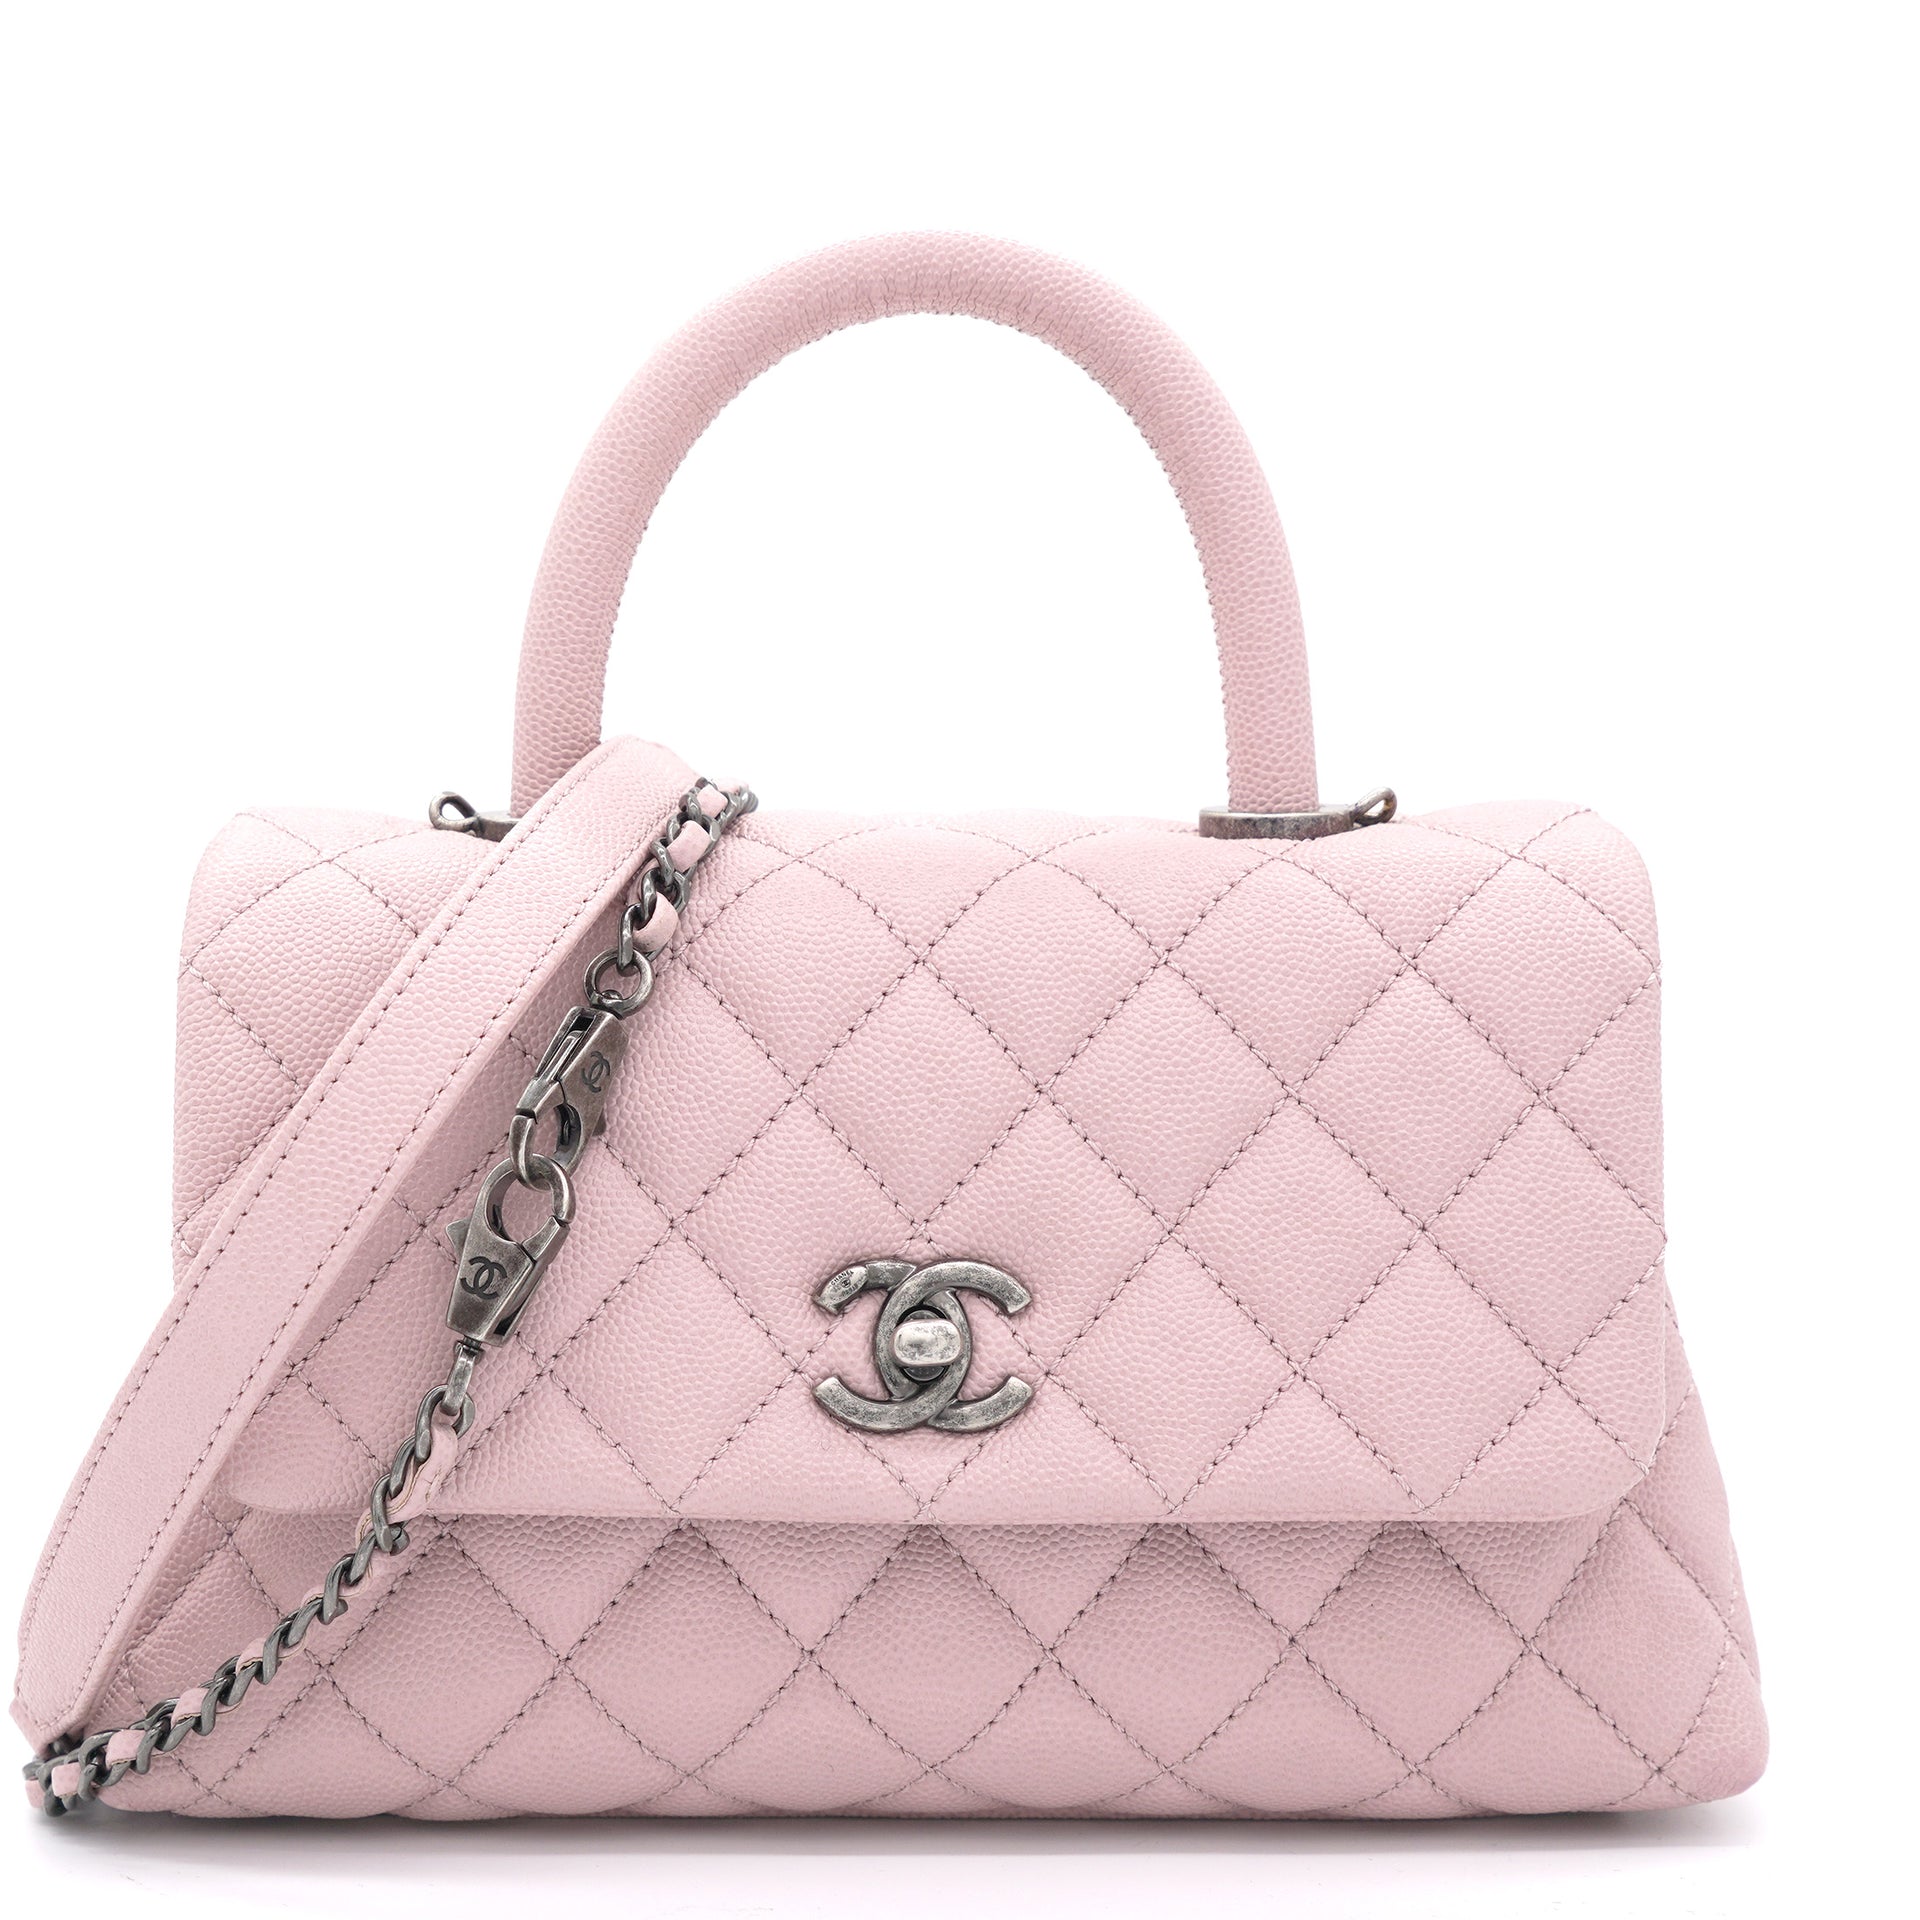 Chanel Small Coco Top Handle Bag